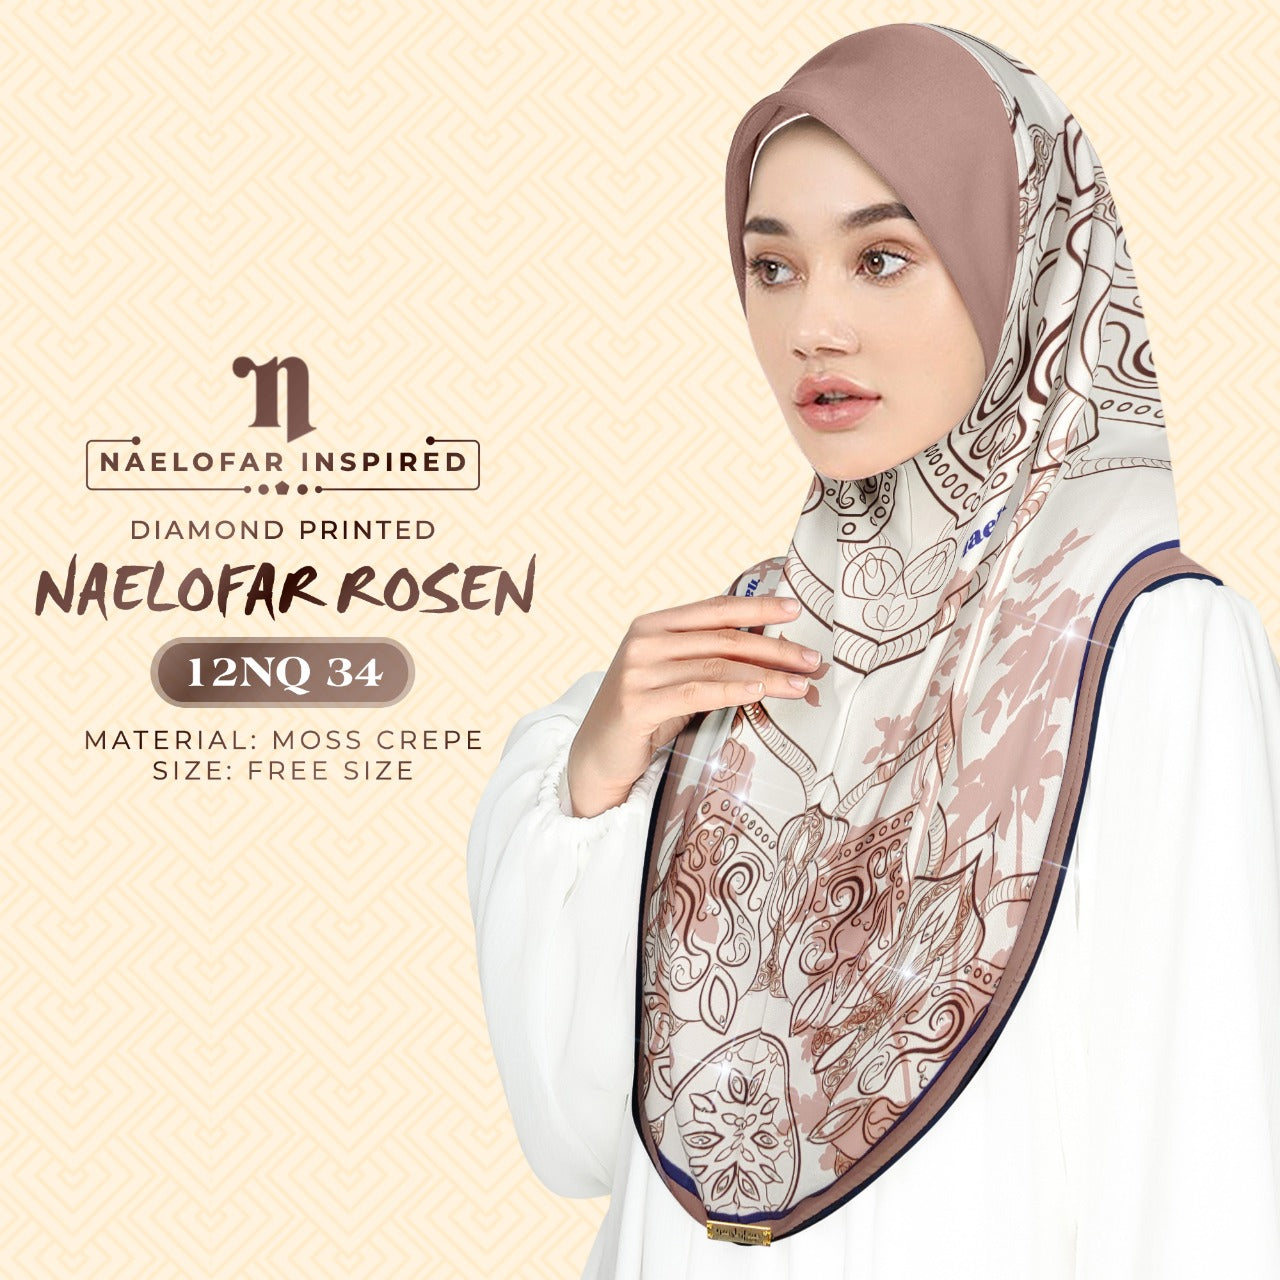 Naelofar Printed Rosen Diamond Instant Collection 2.0